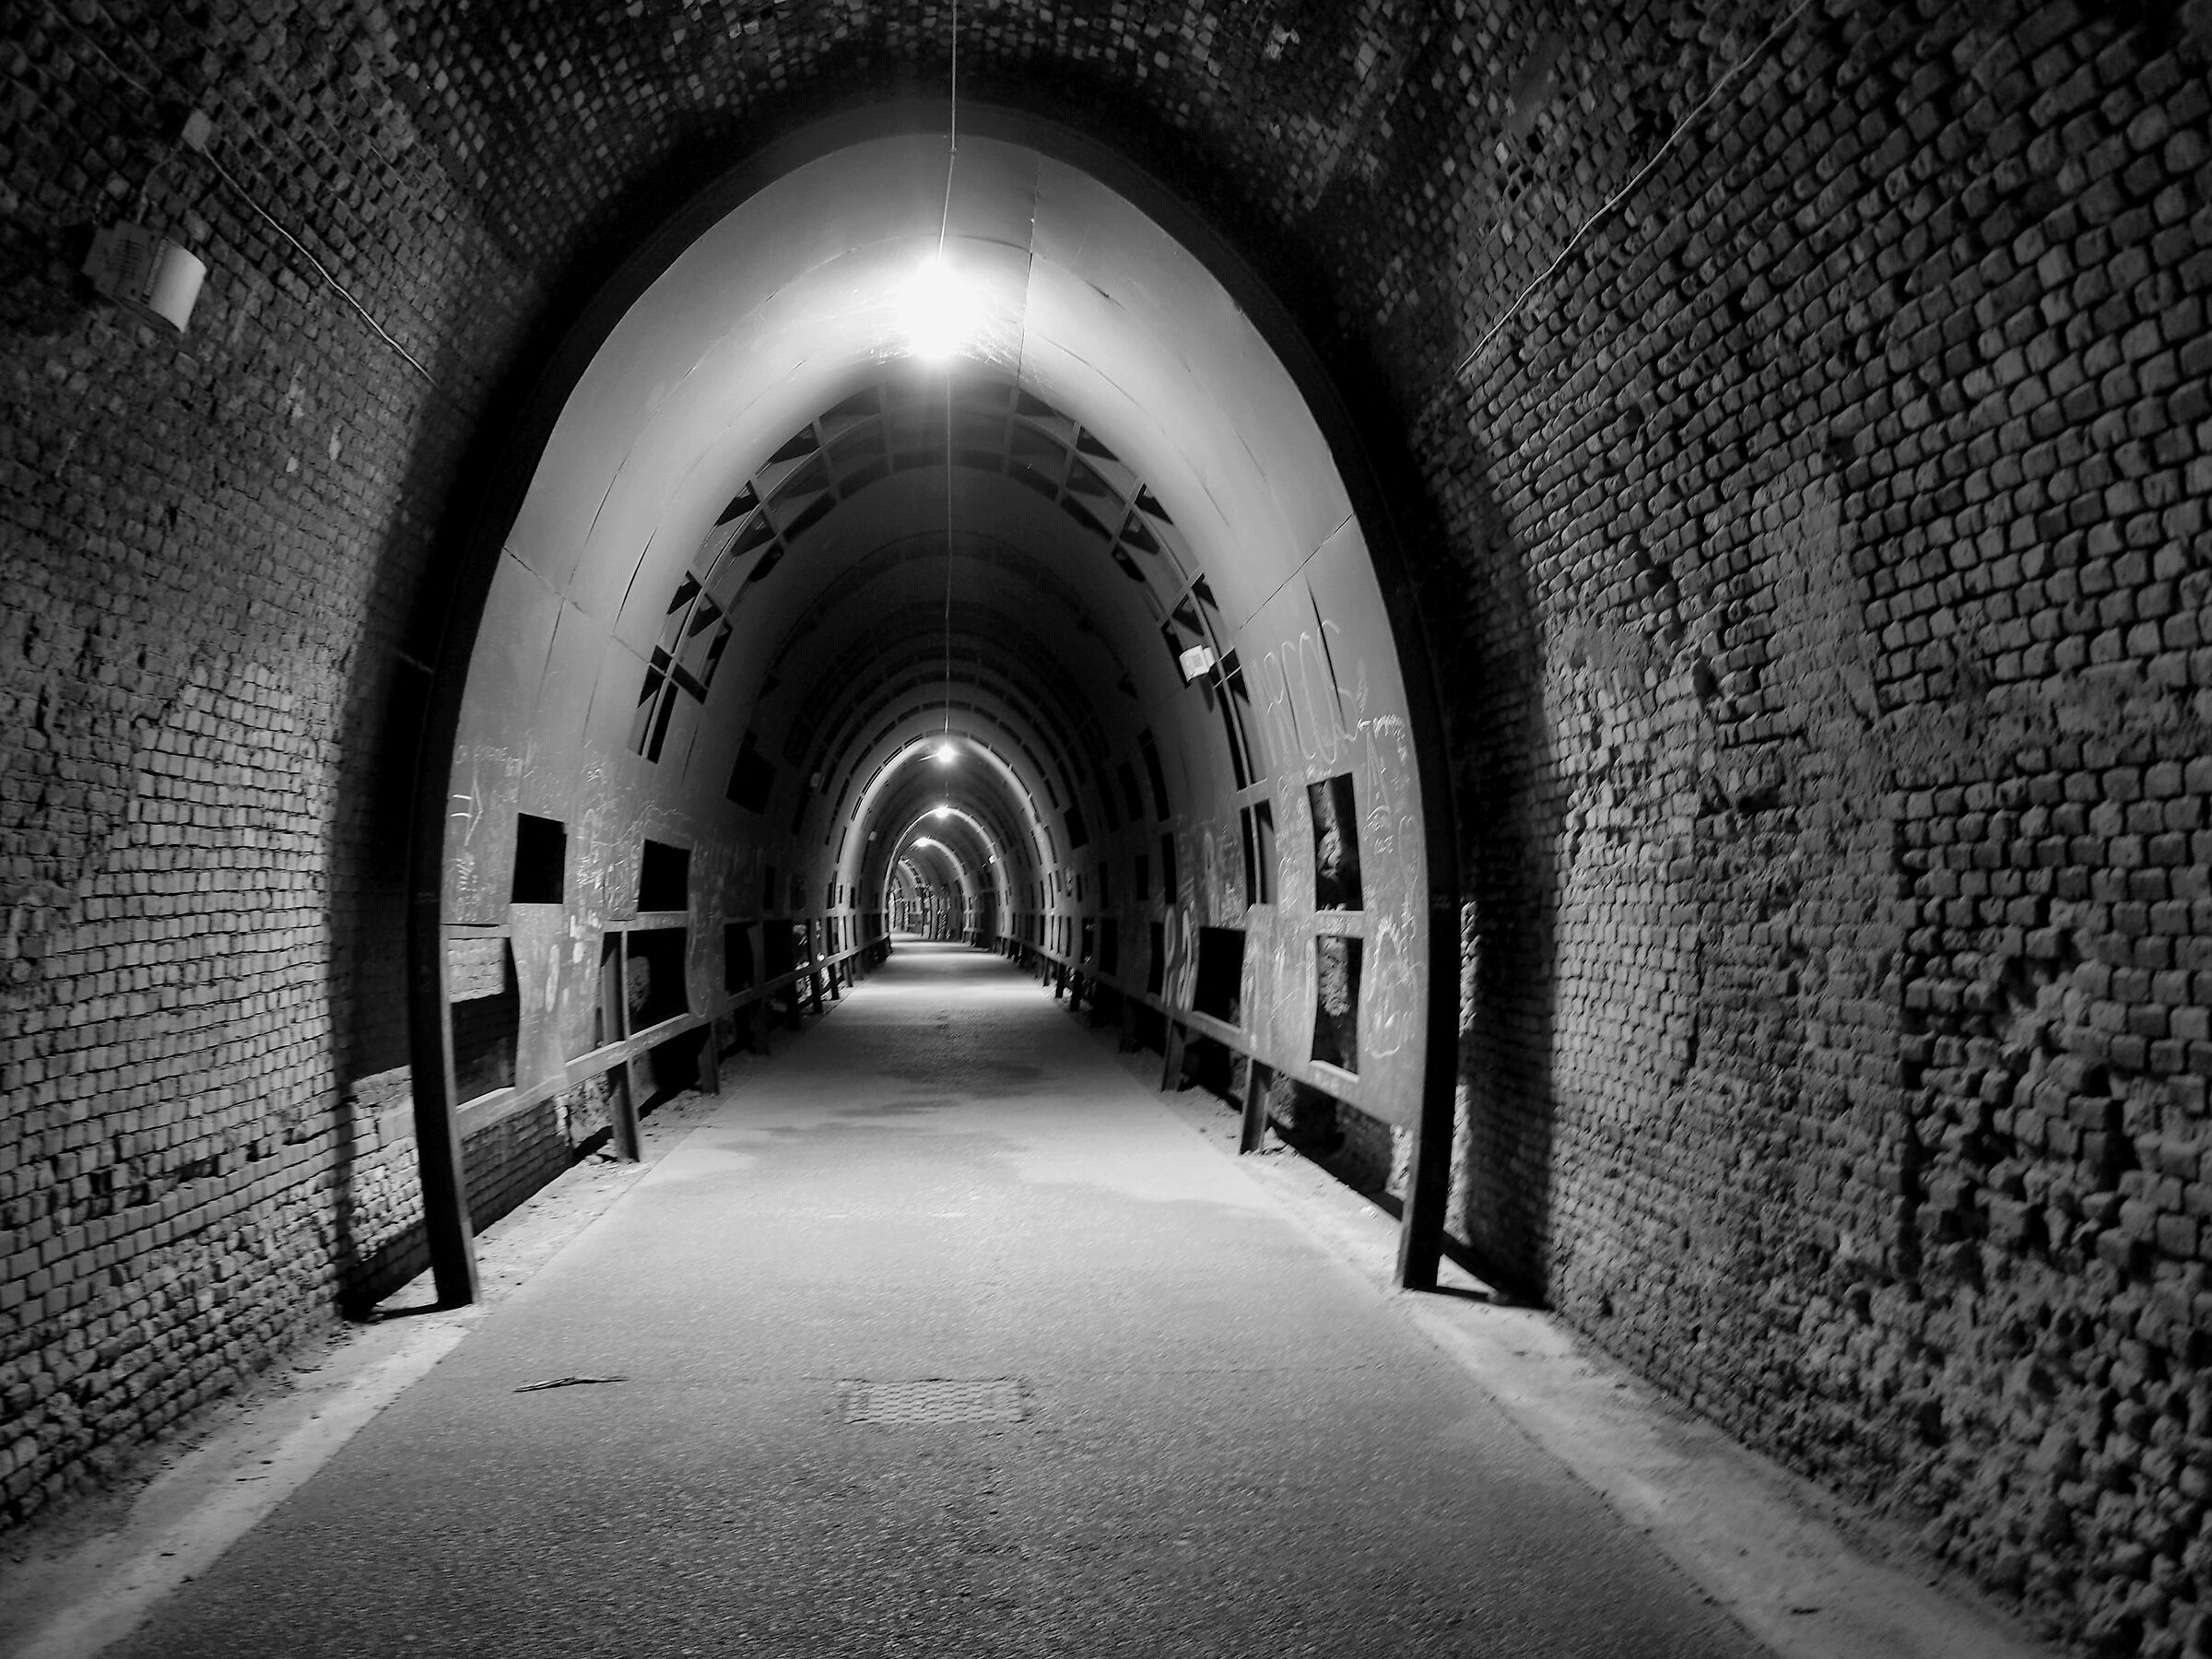 ex-railway tunnel...